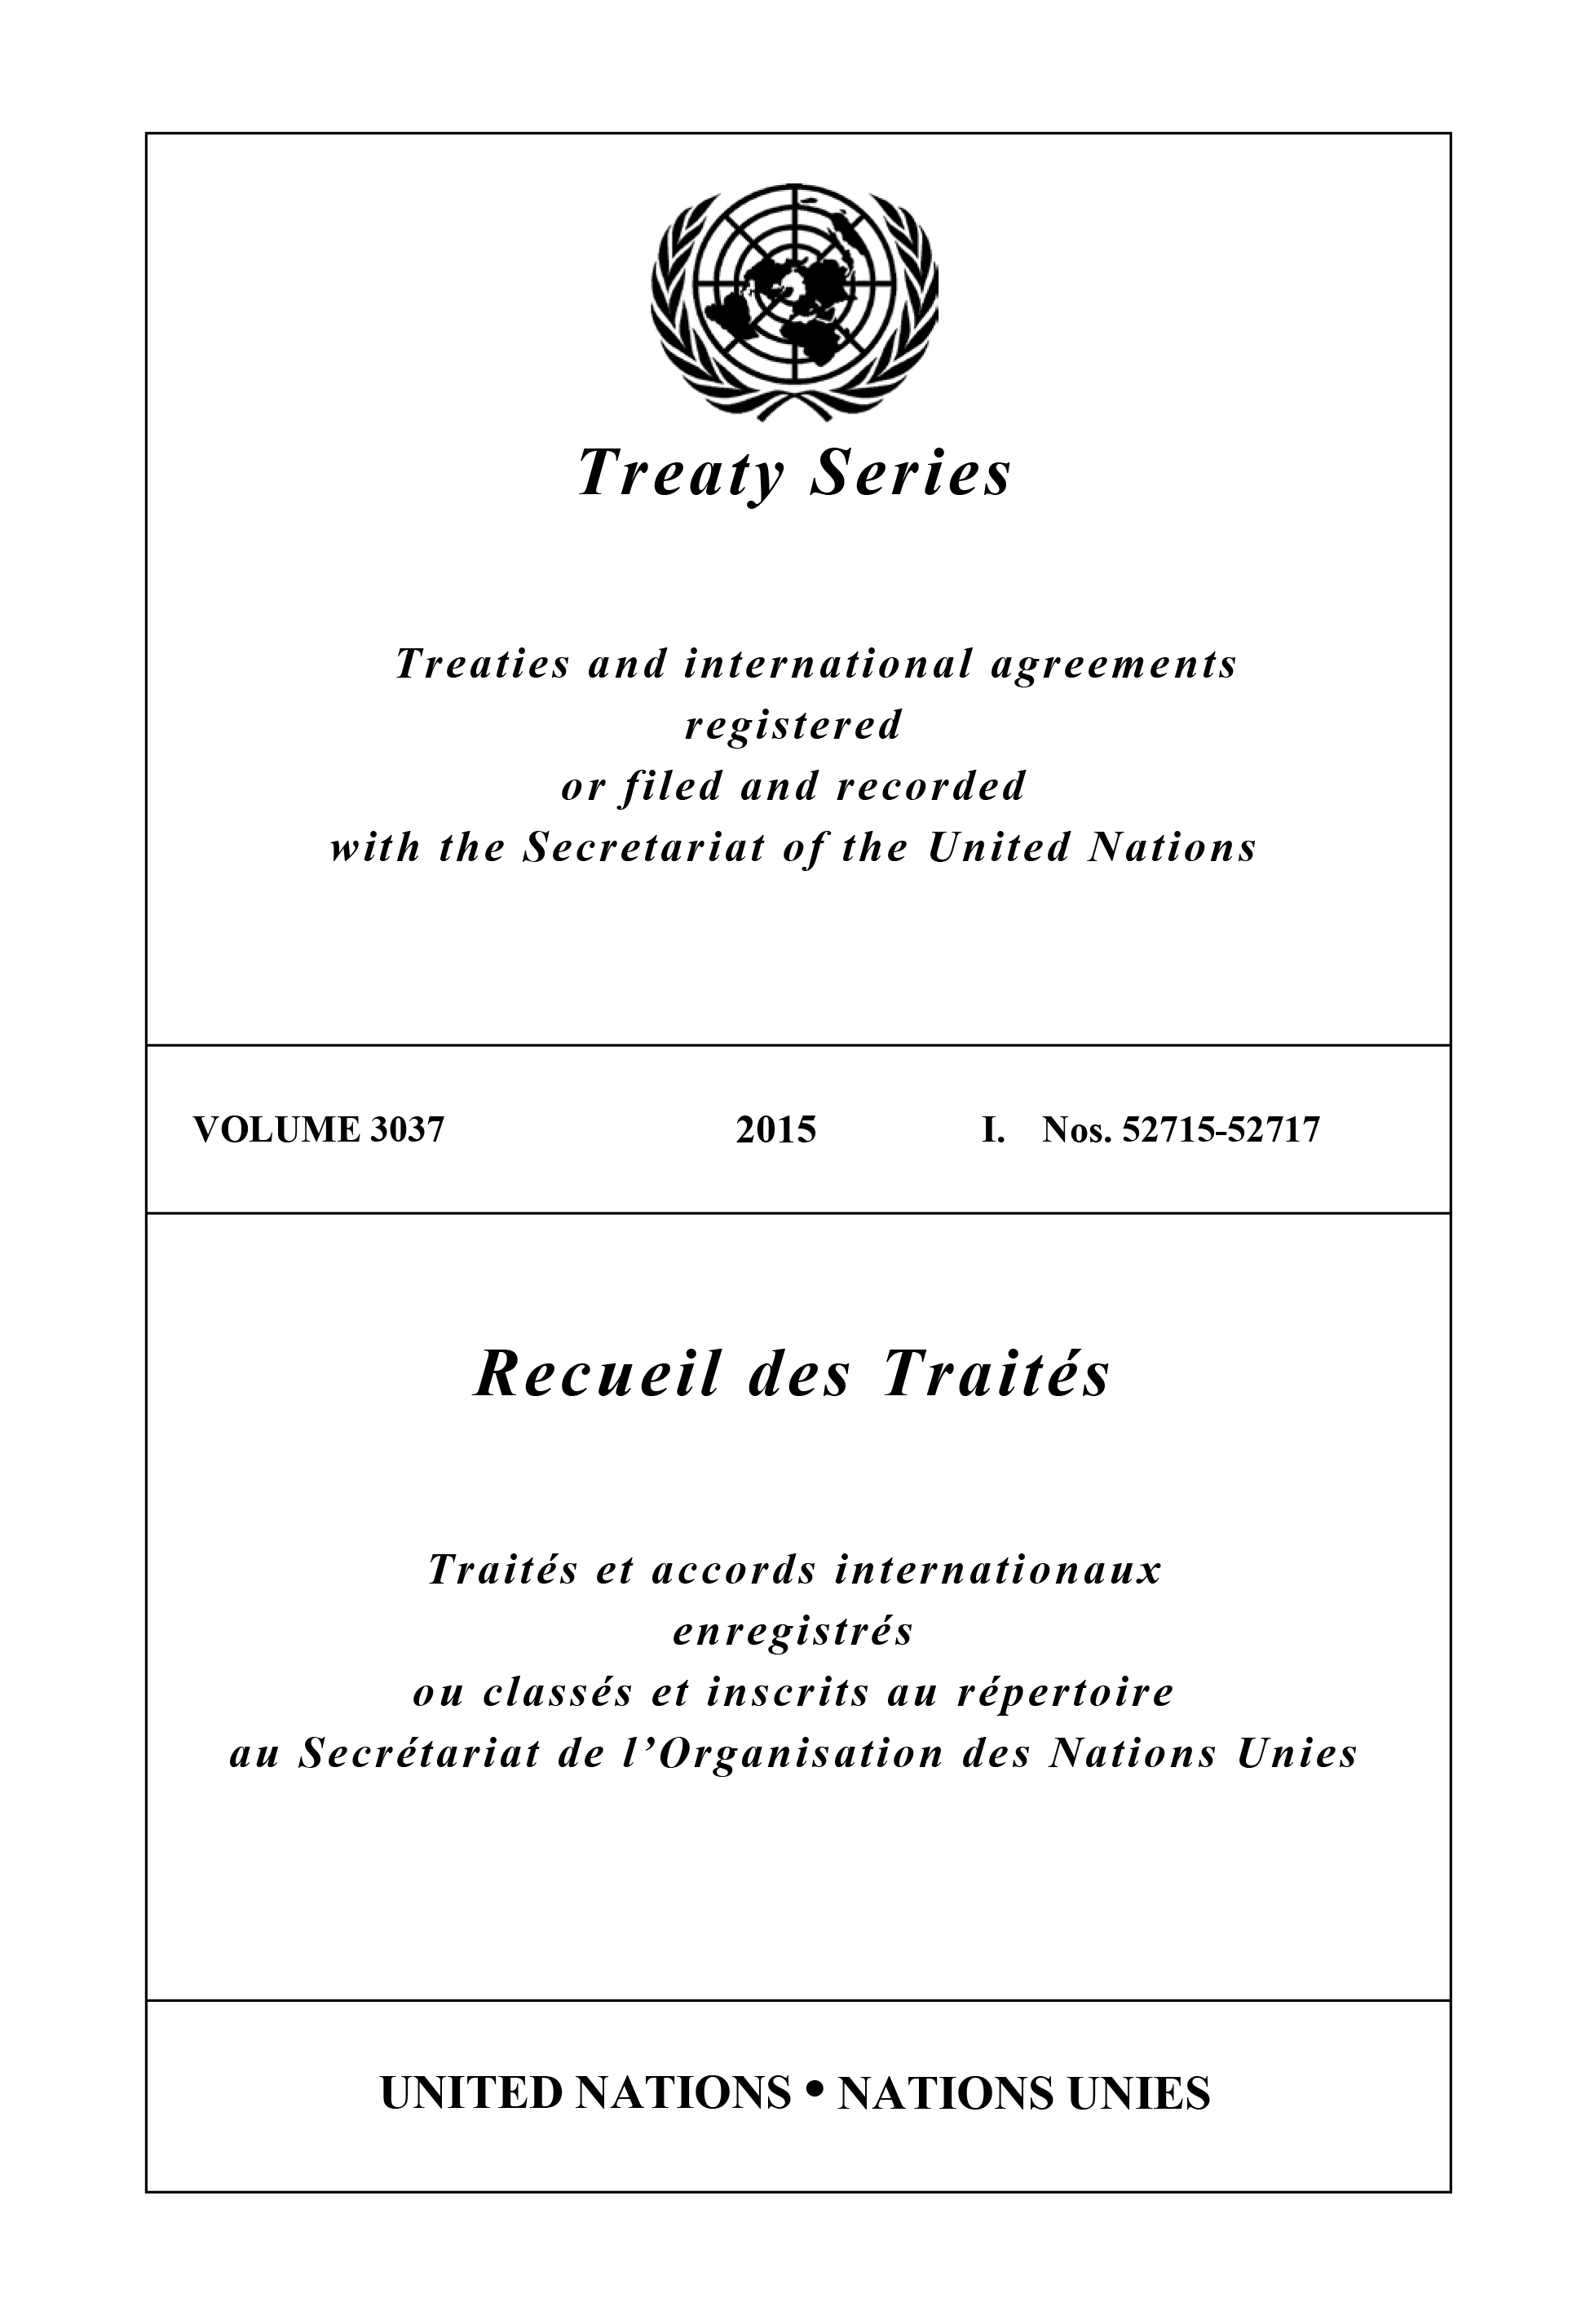 image of Treaty Series 3037